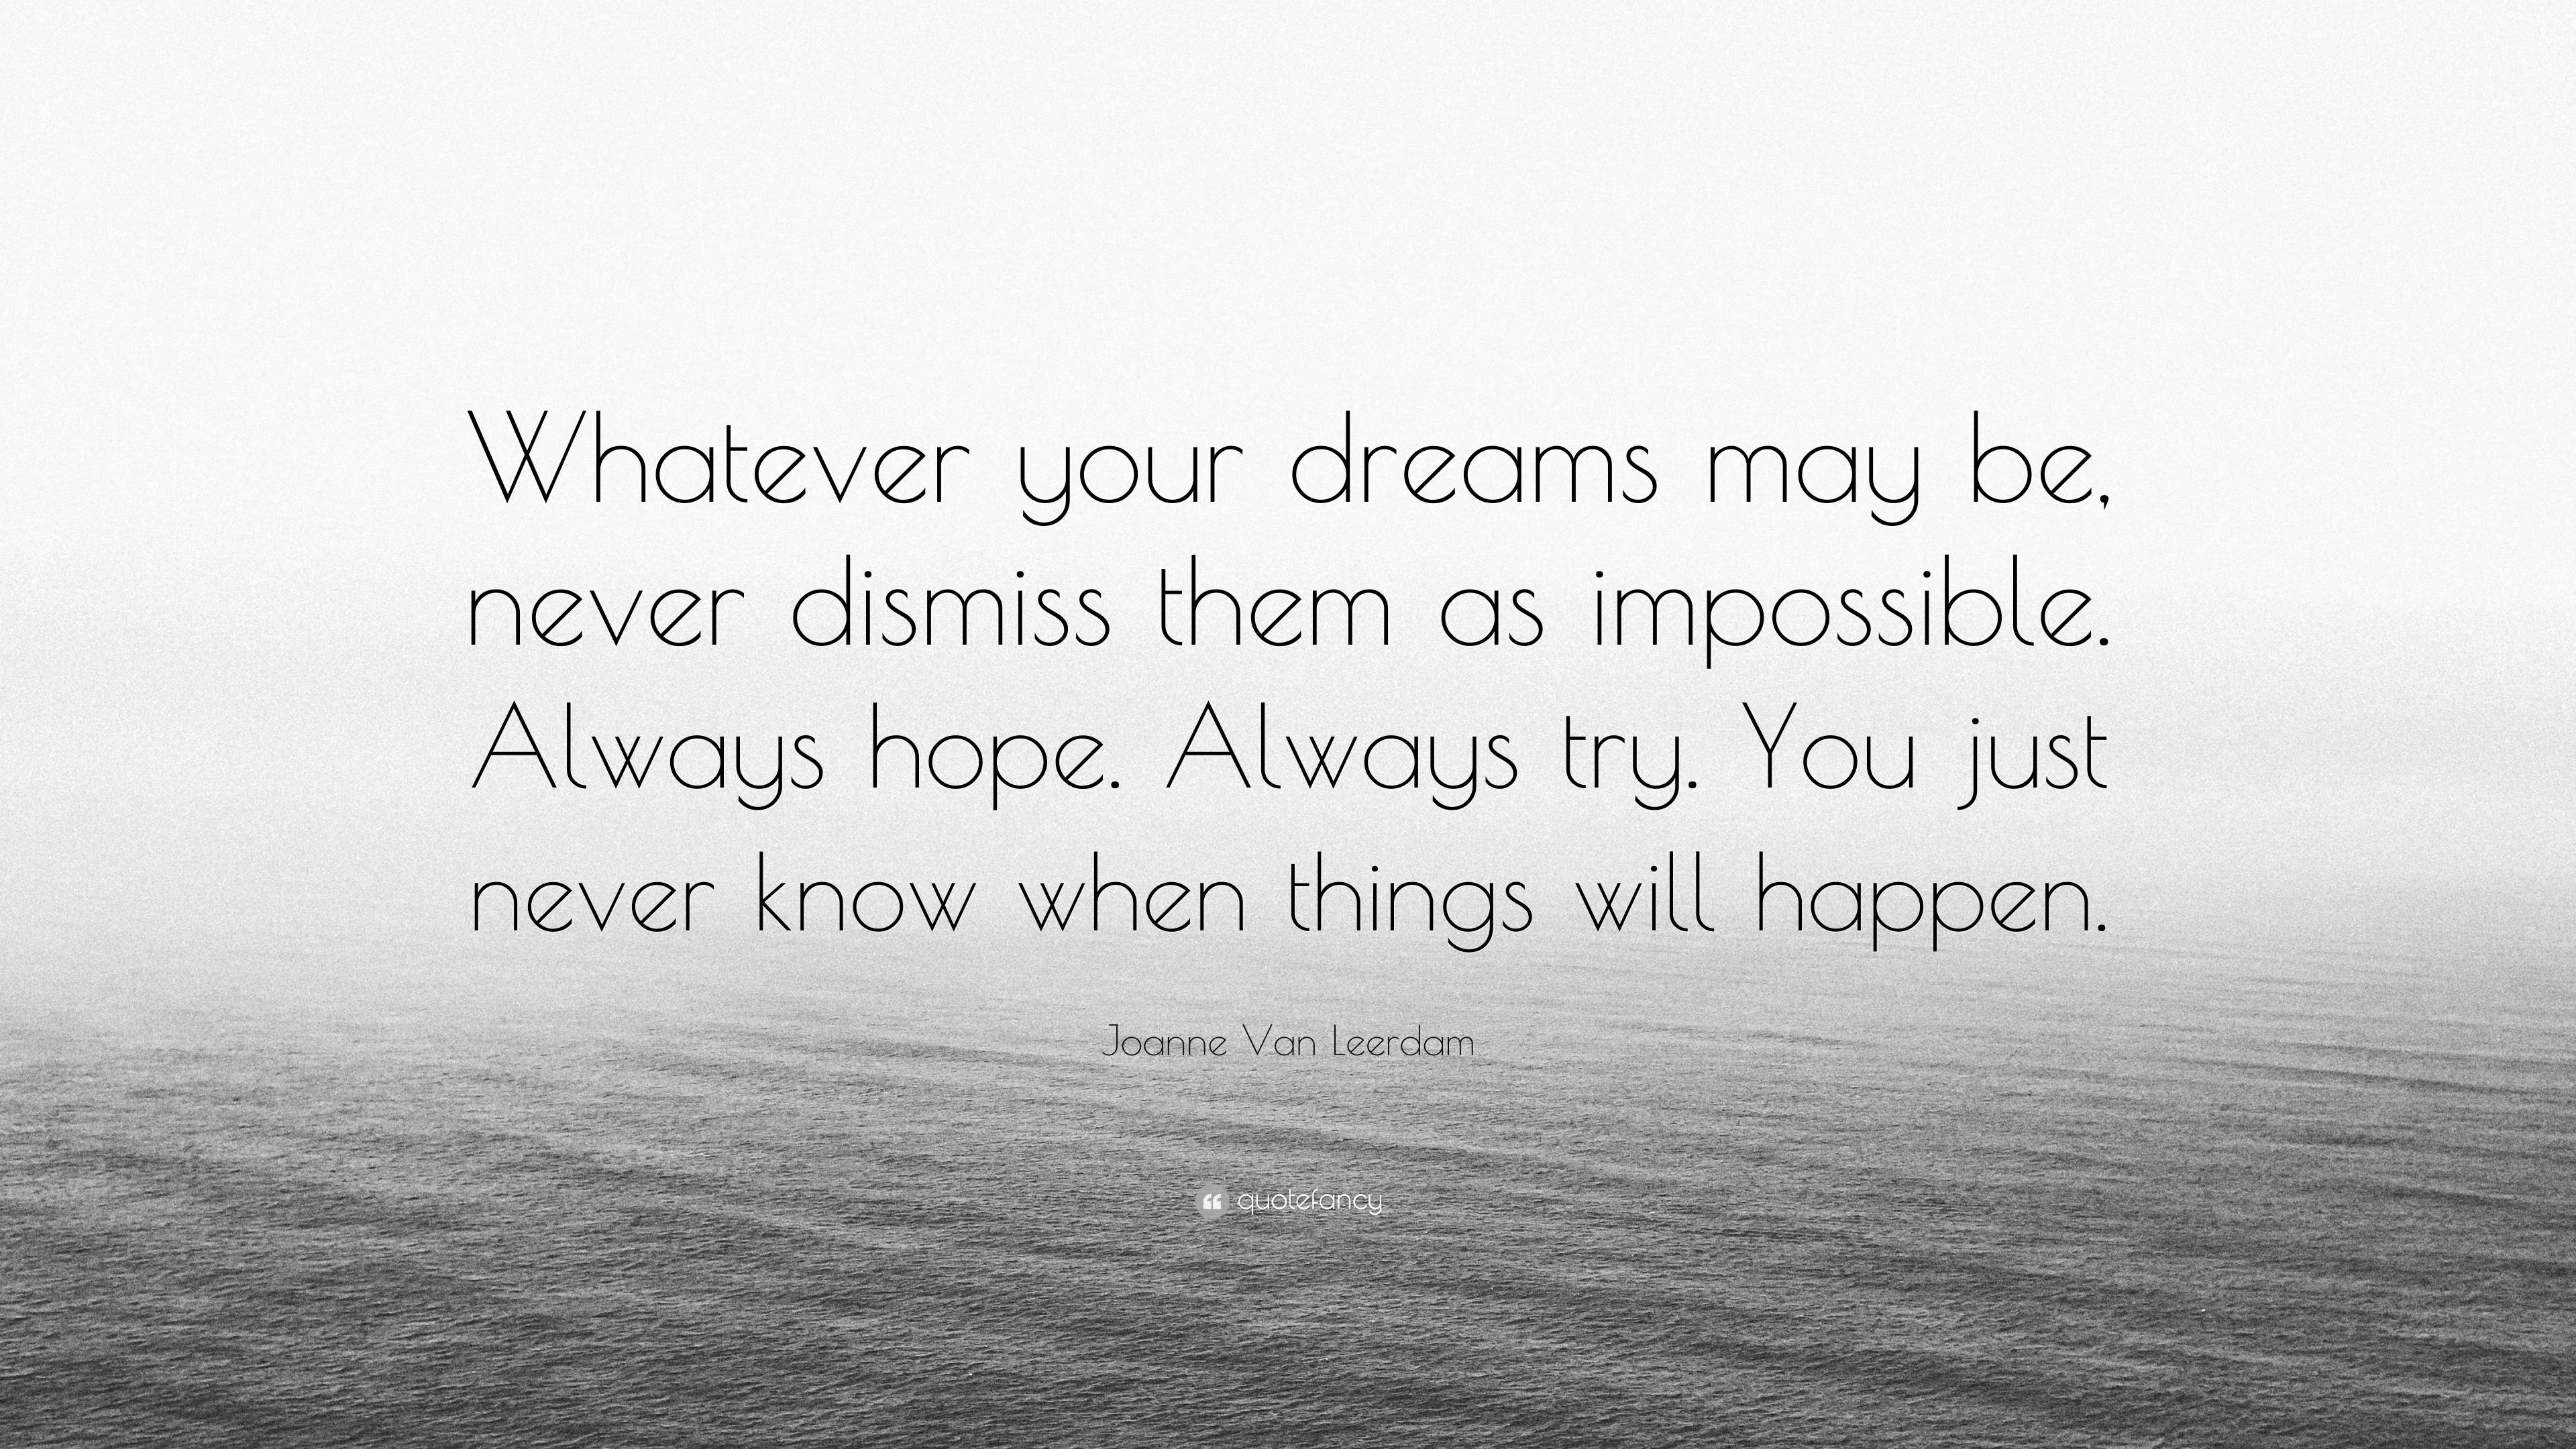 Joanne Van Leerdam Quote: “Whatever your dreams may be, never dismiss ...